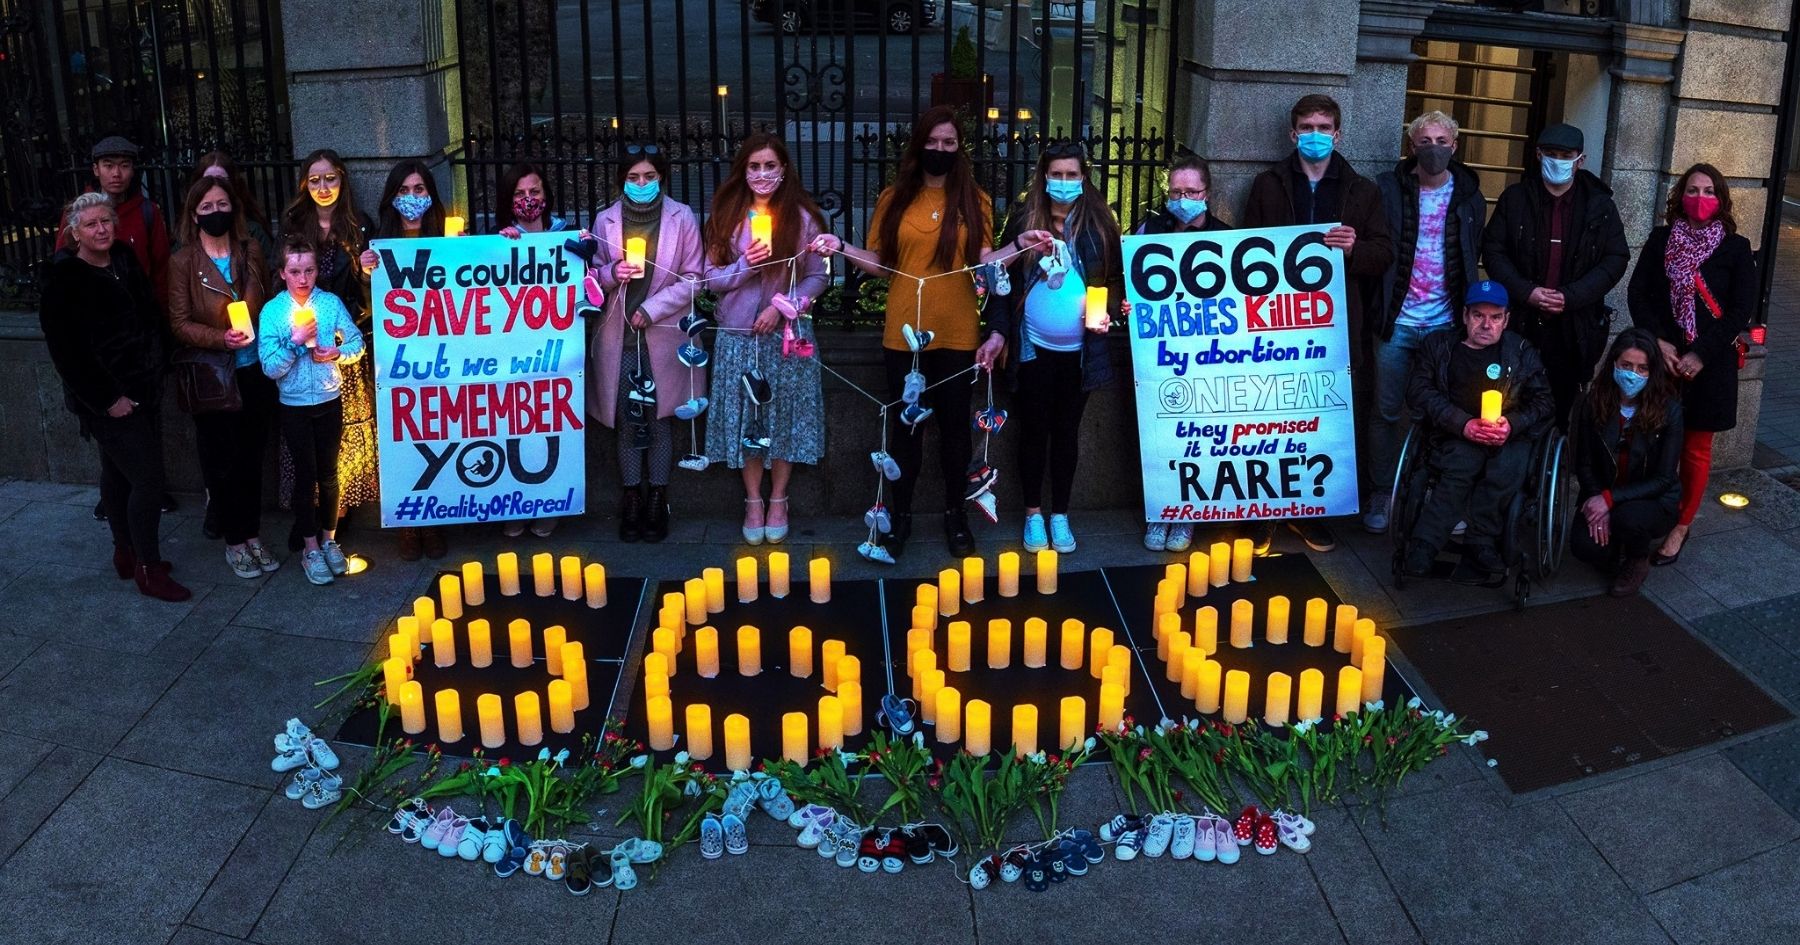 Ireland commemorates abortion referendum third anniversary, over 6000 lives lost